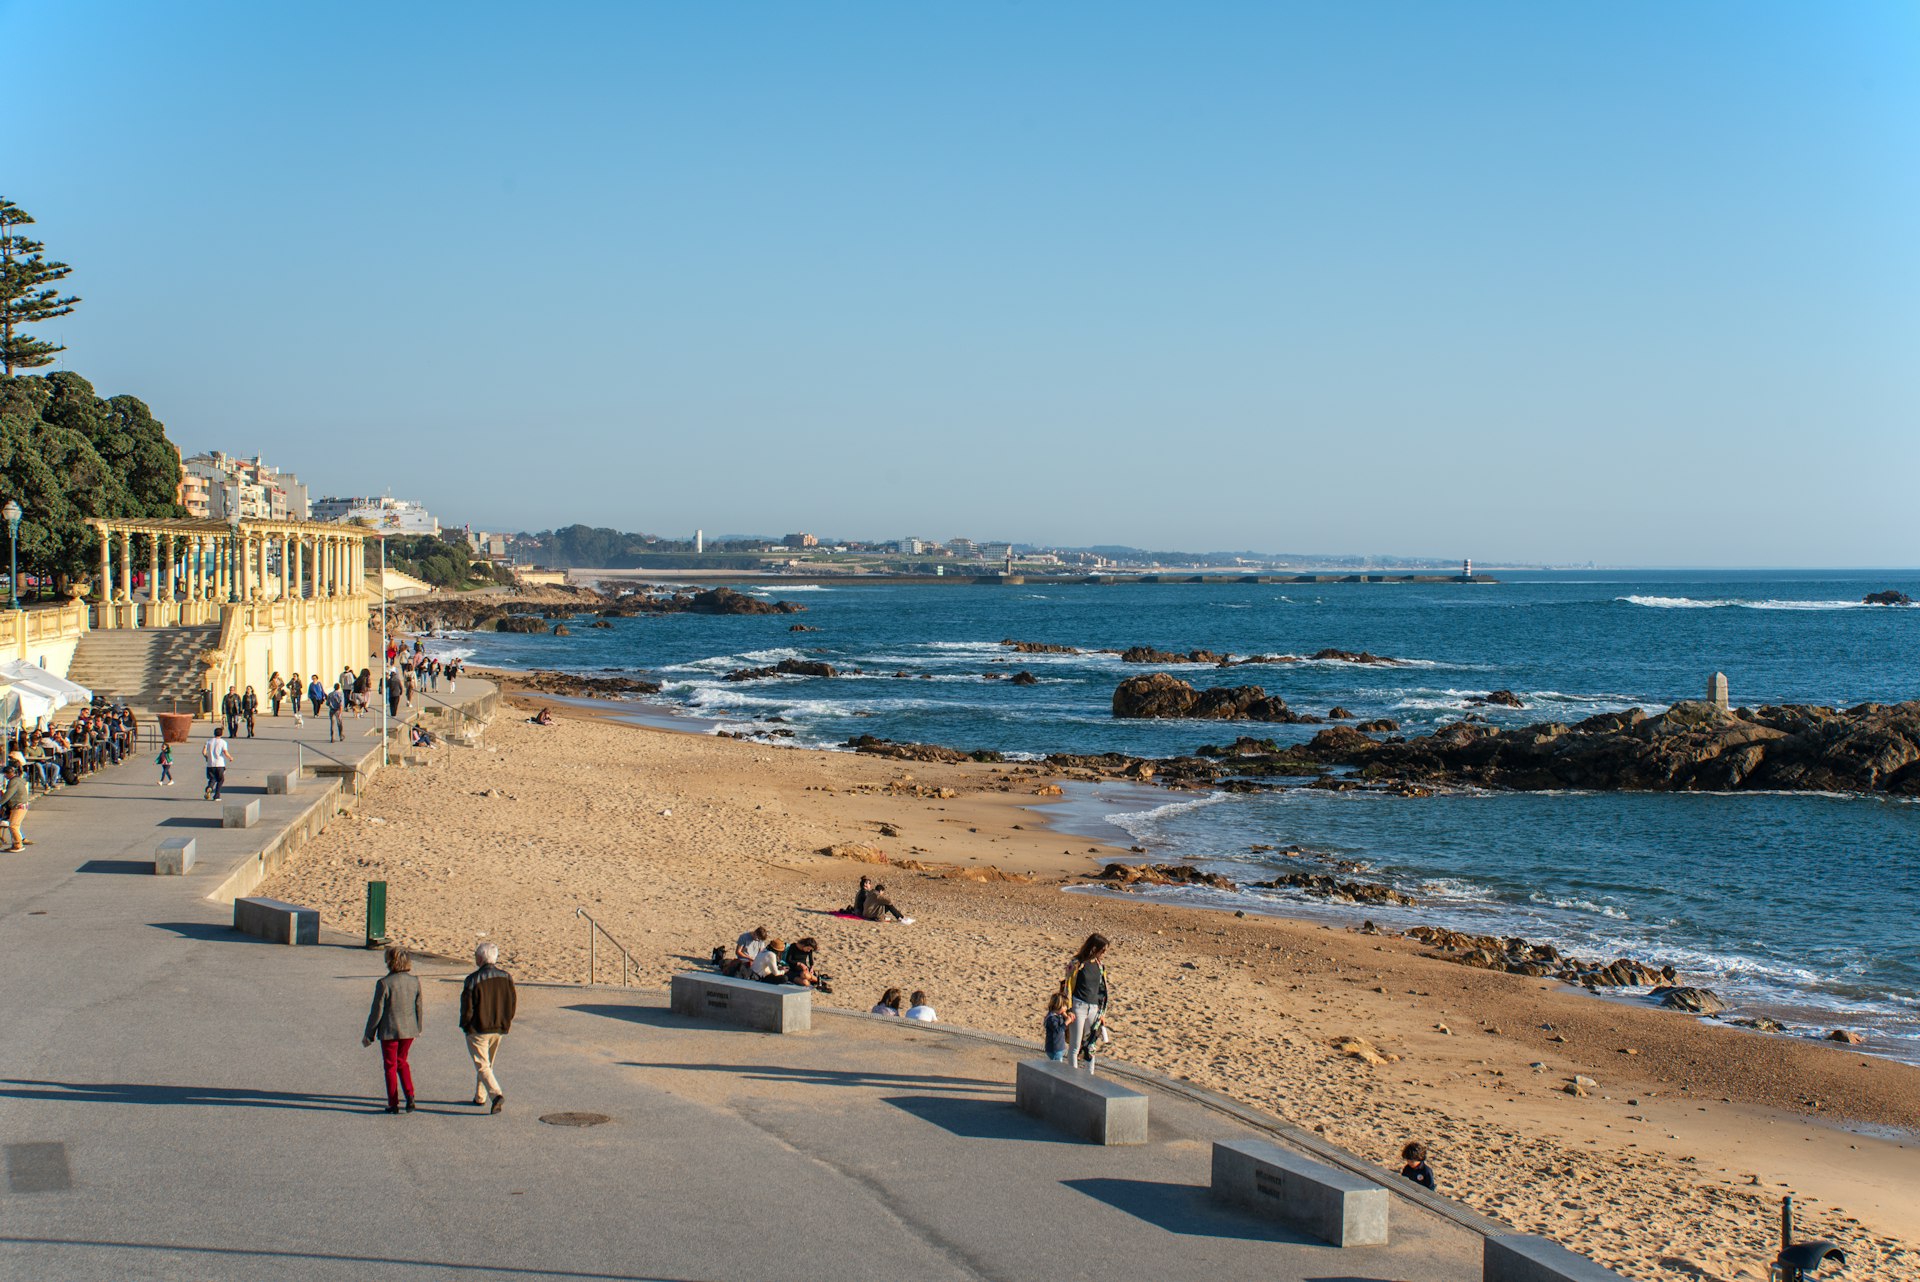 People walk along a beachfront path by the Atlantic Ocean, Porto, Portugal